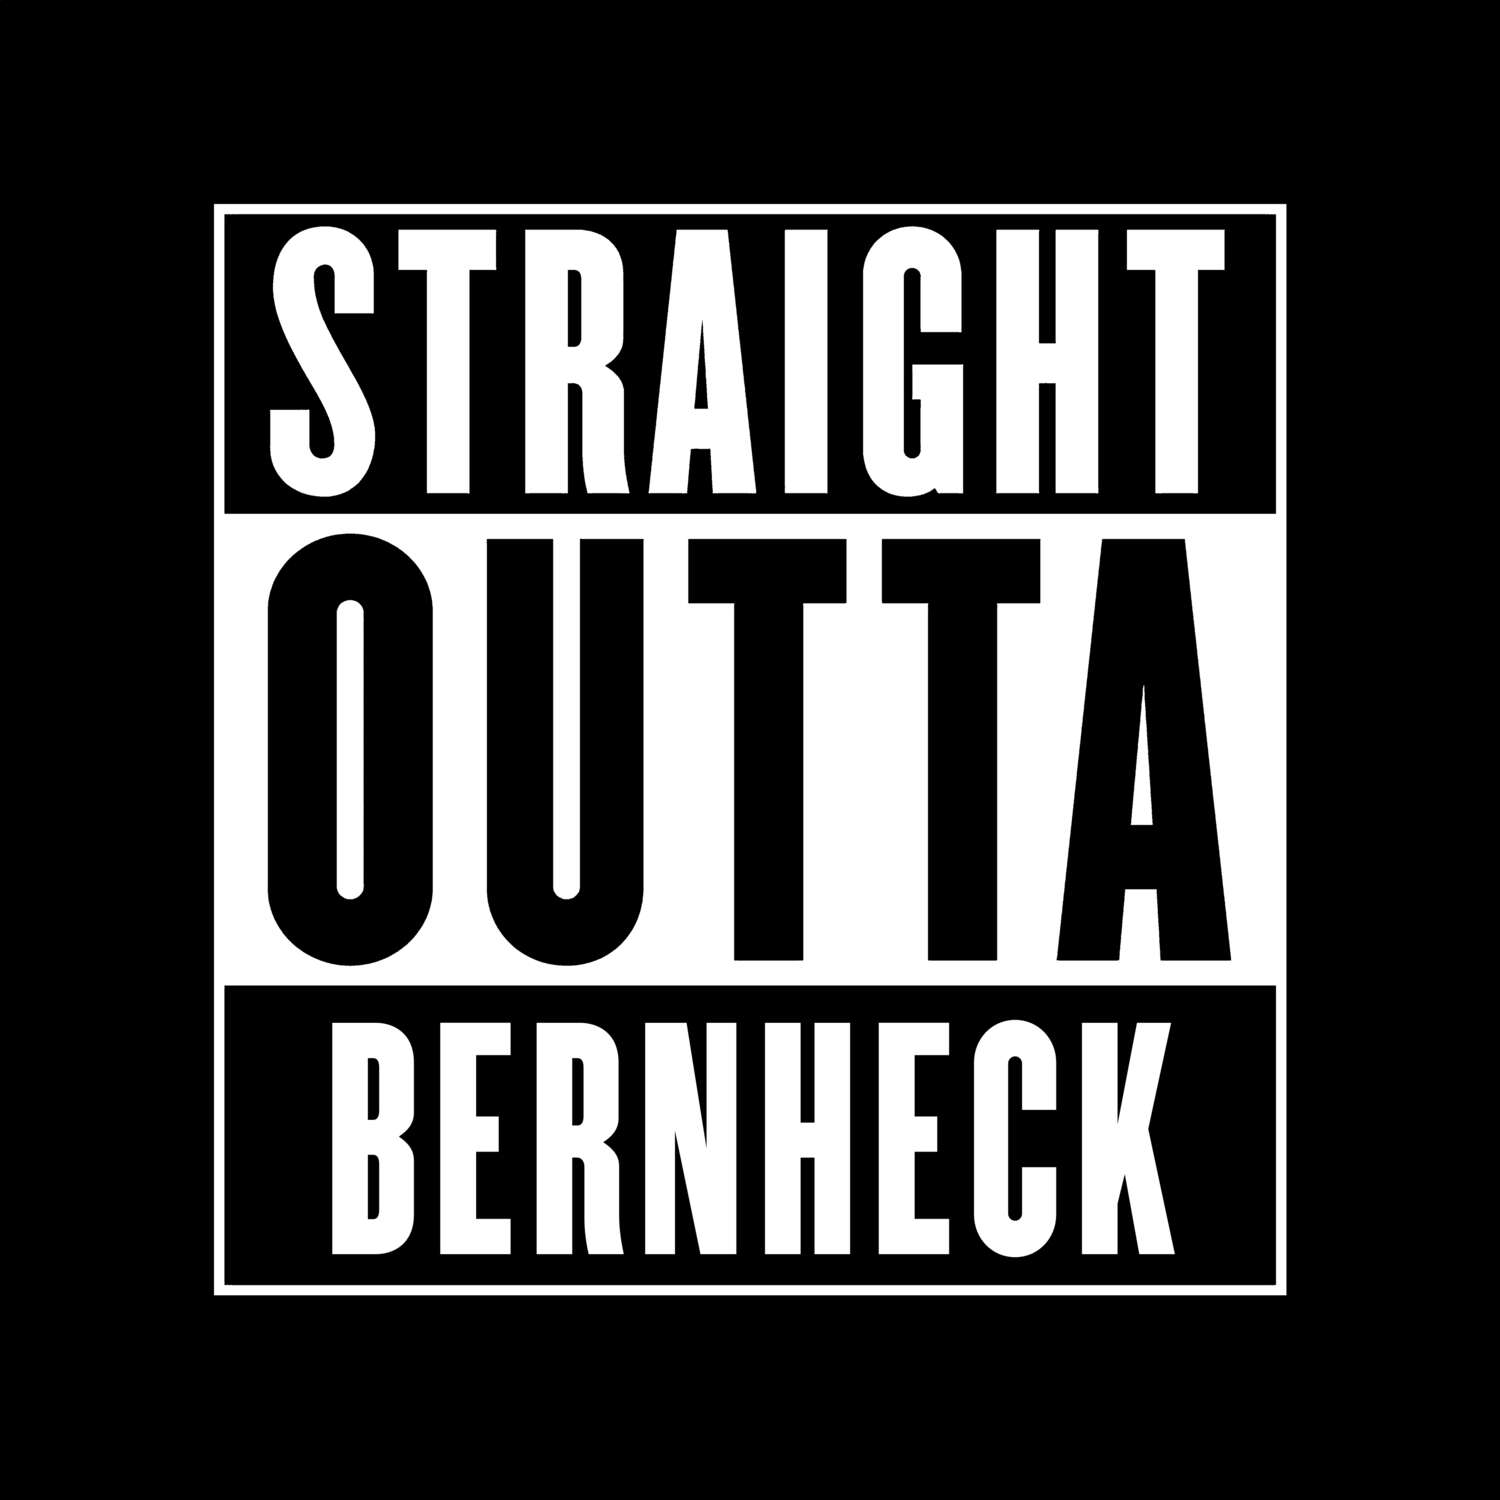 Bernheck T-Shirt »Straight Outta«